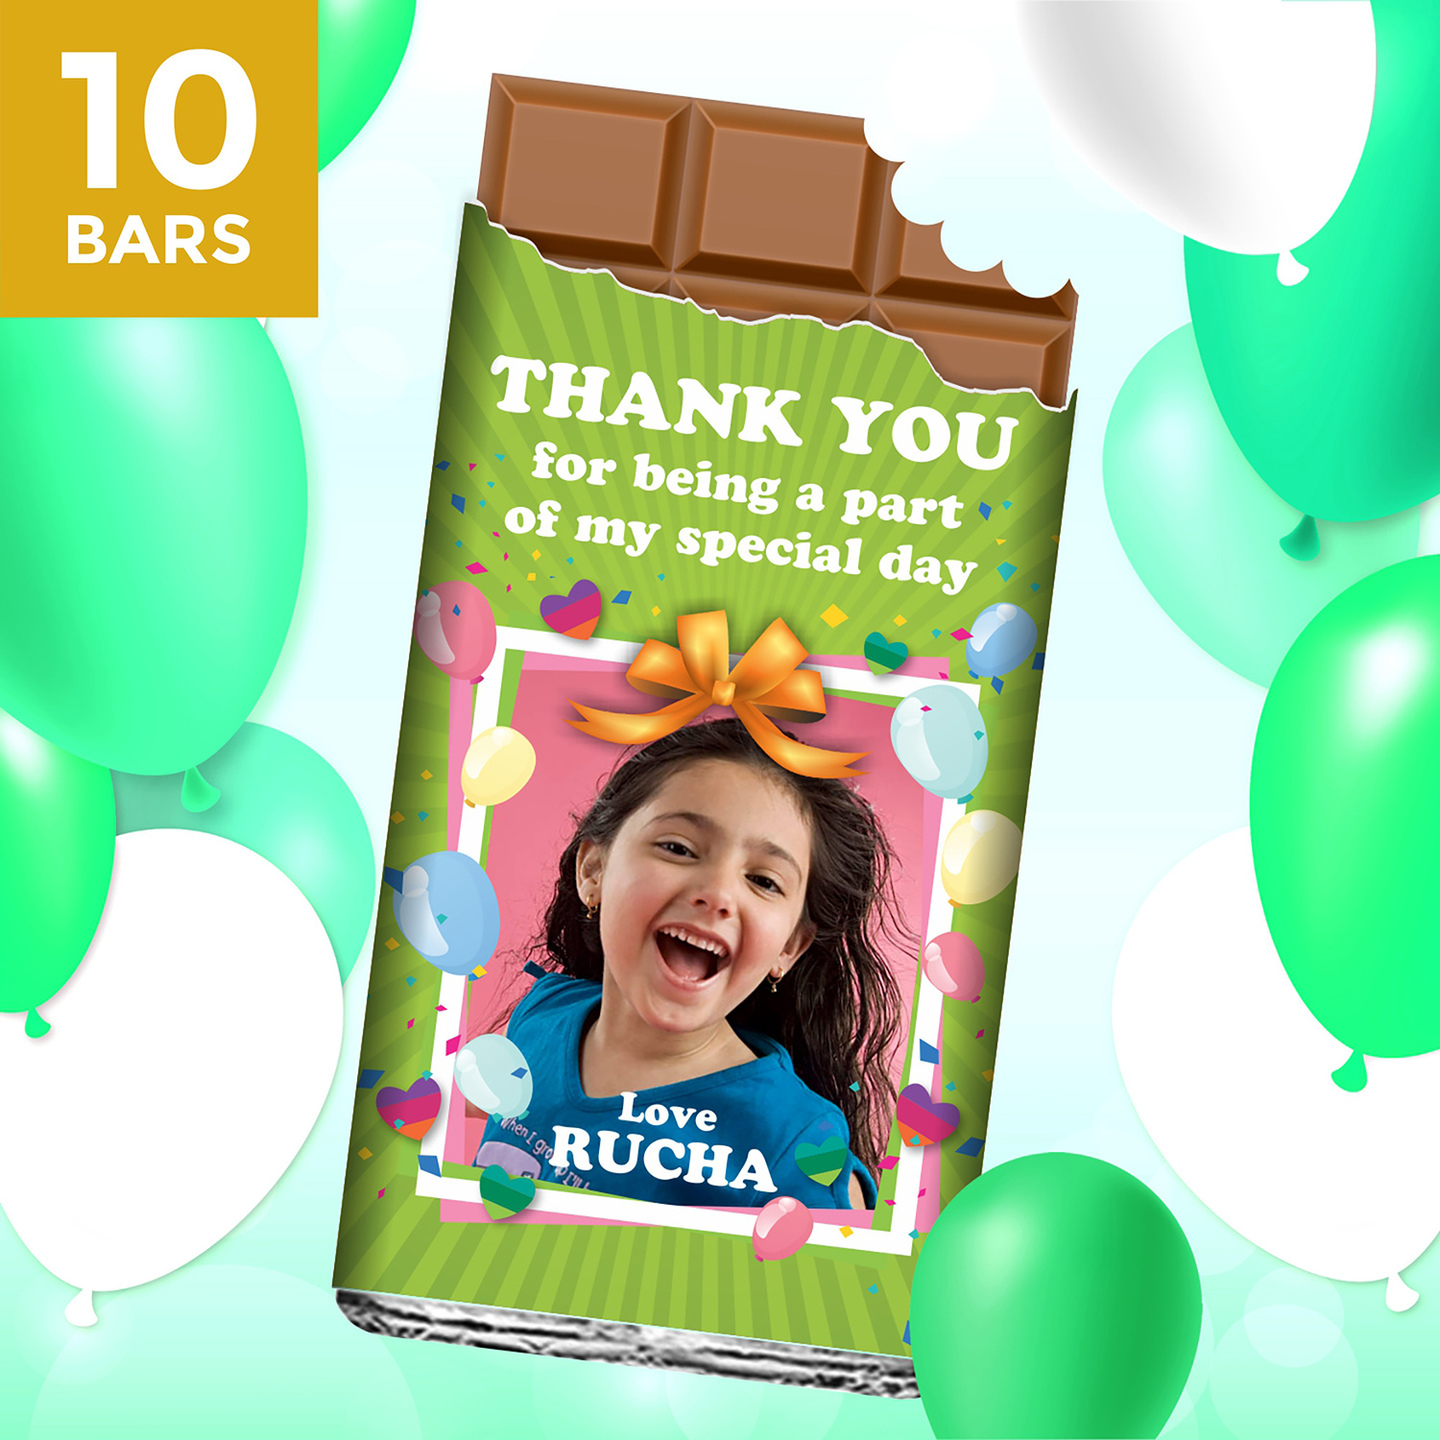 Birthday Return Gifts, Personalize Chocolates -10 Bars